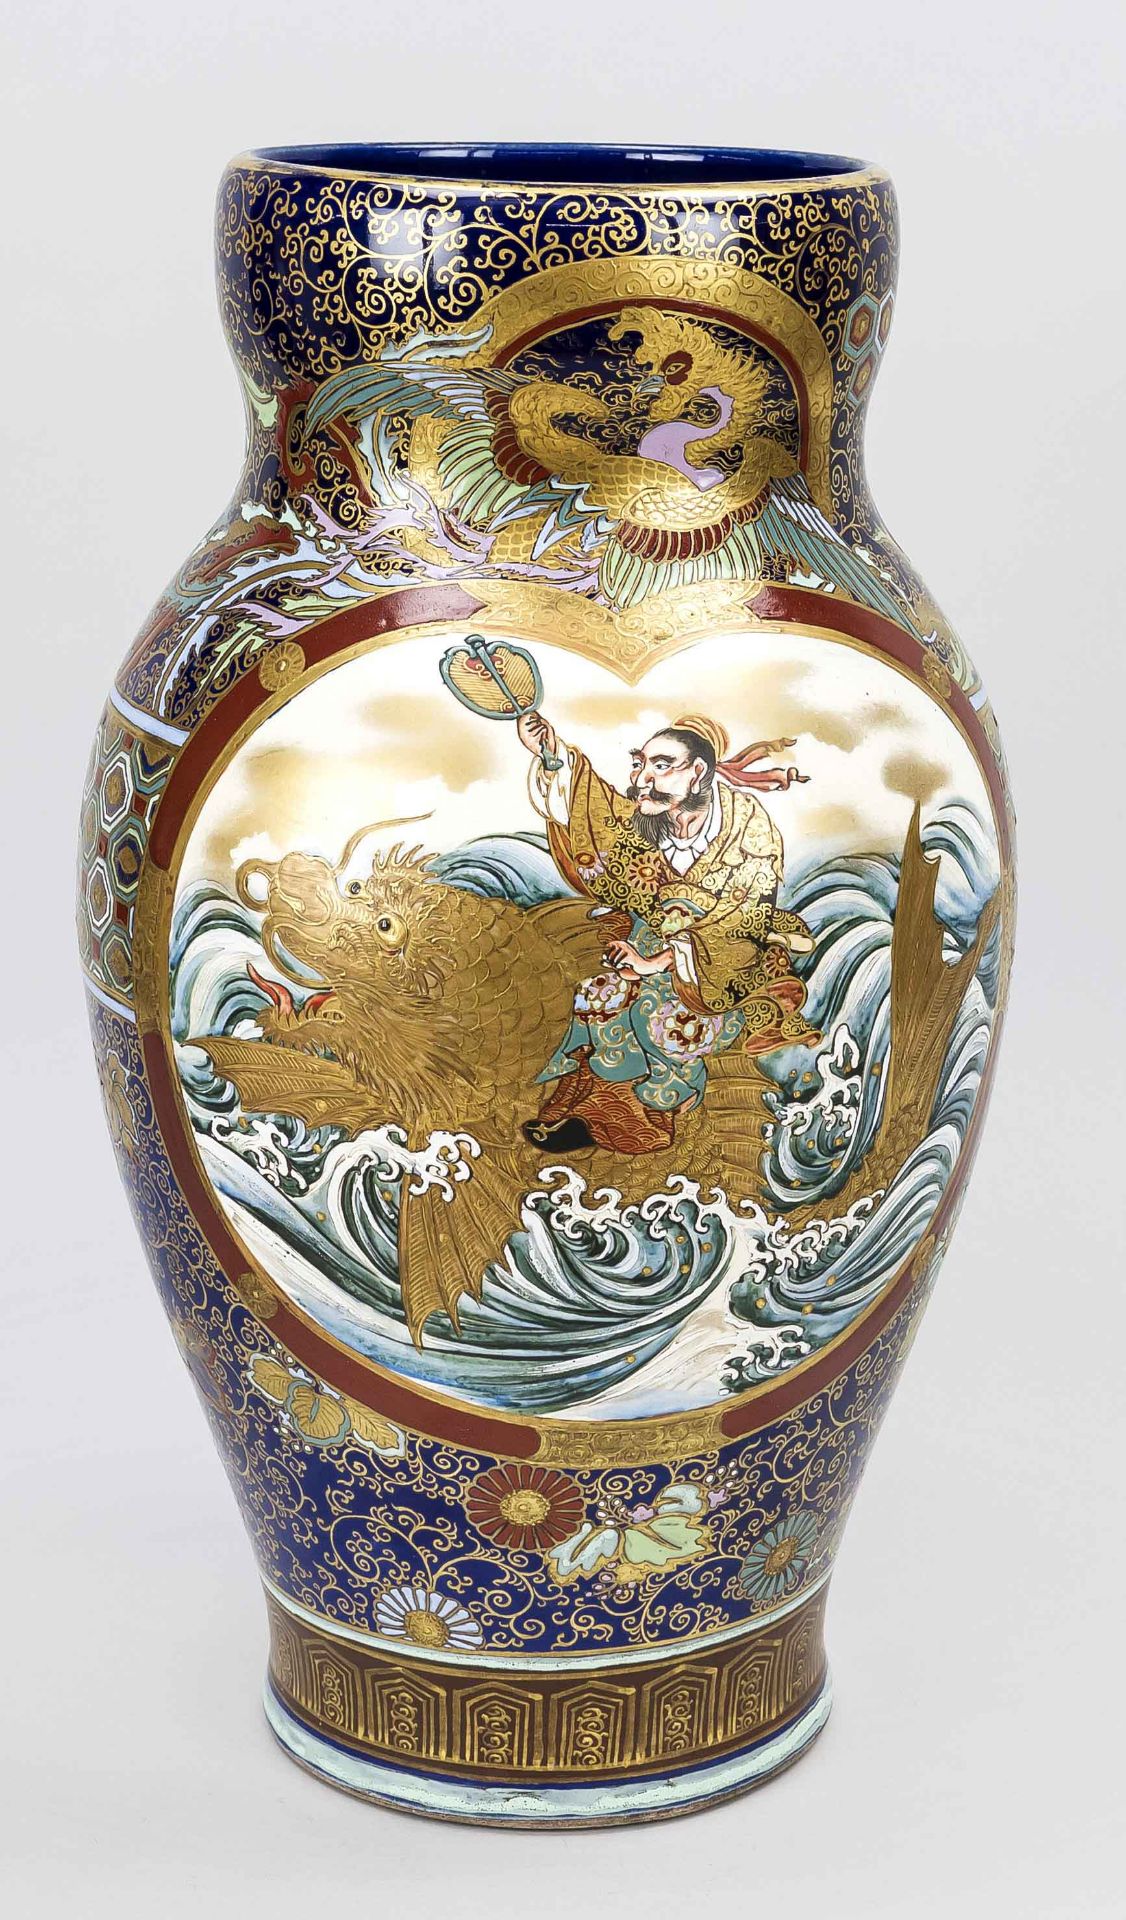 Large Kinkozan Satsuma vase, Japan, late 19th century (Meiji). Body divided into 2 large, curved